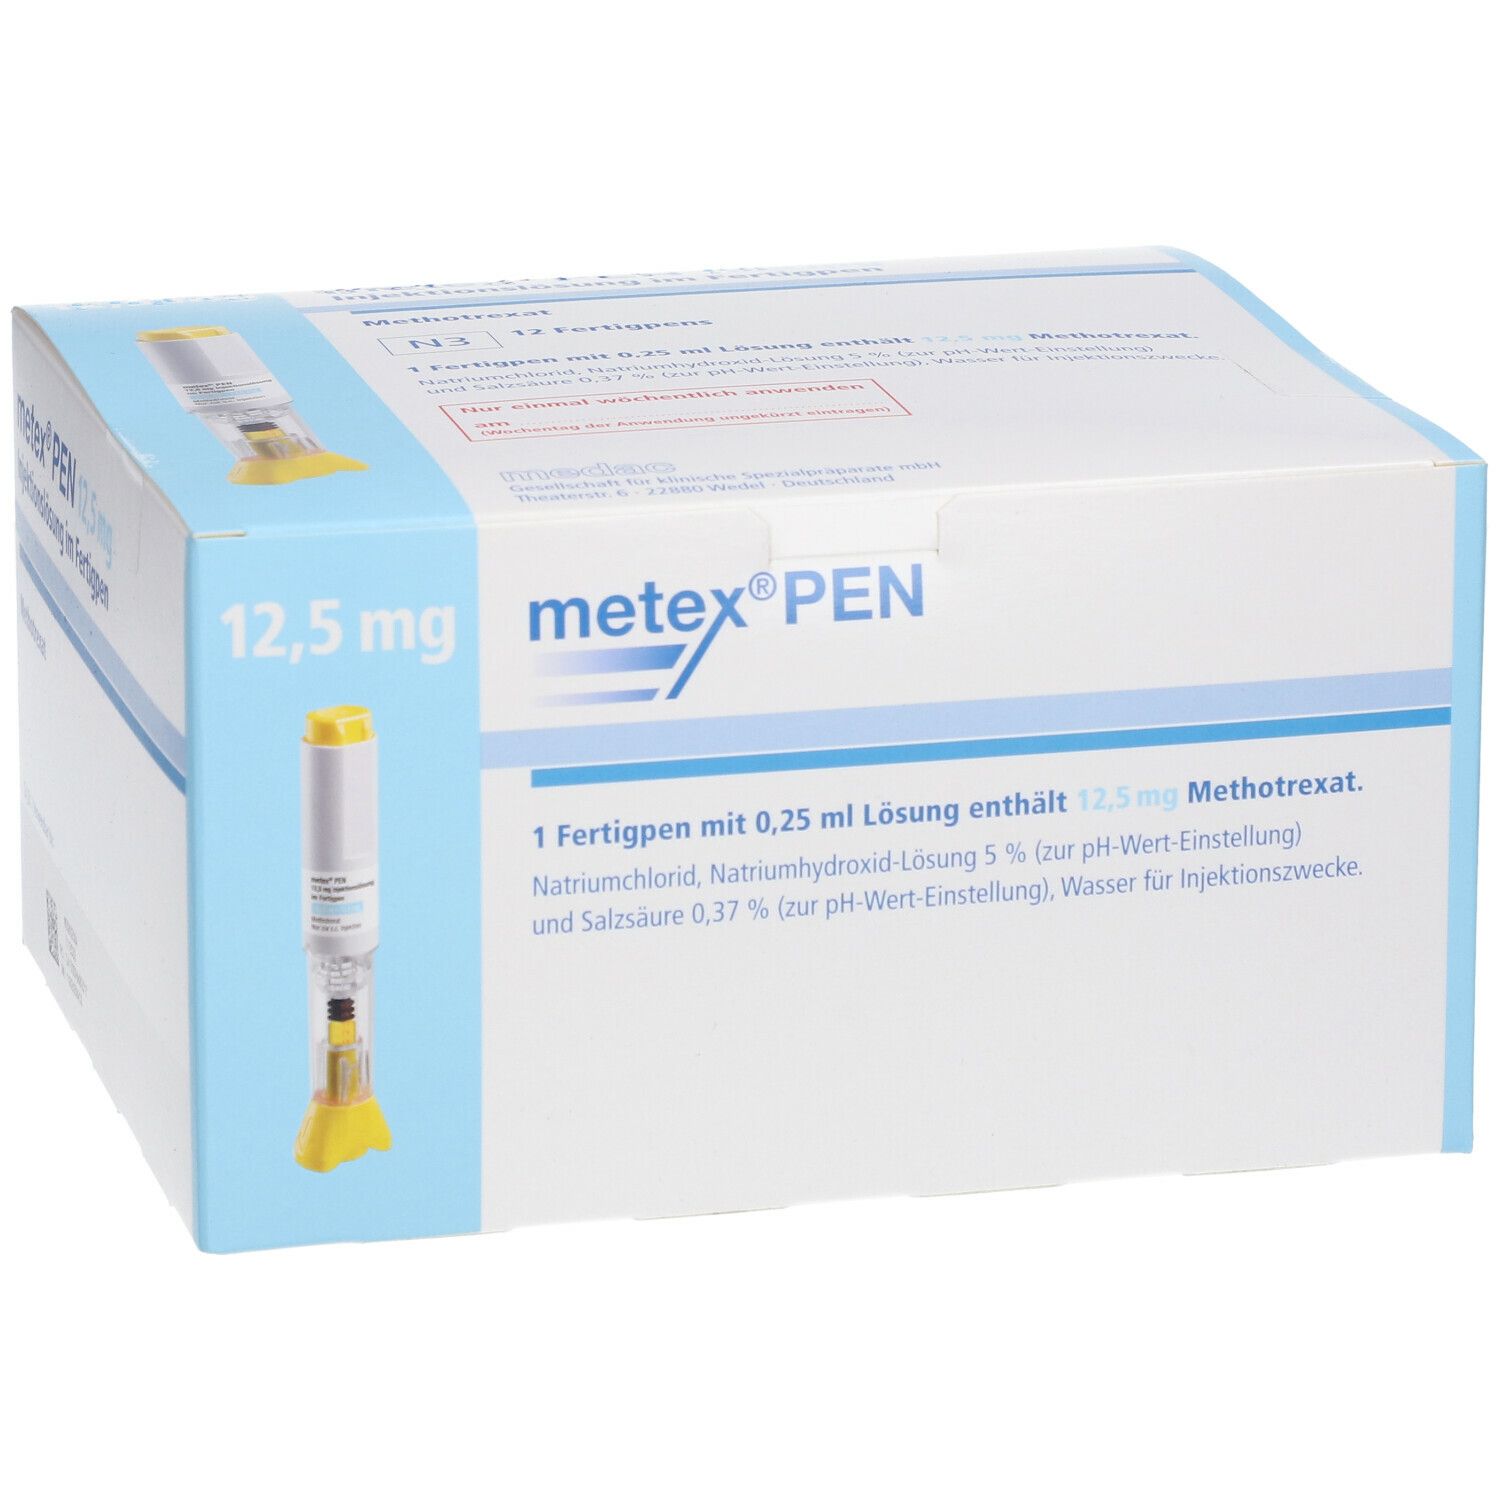 metex® PEN 12,5 mg